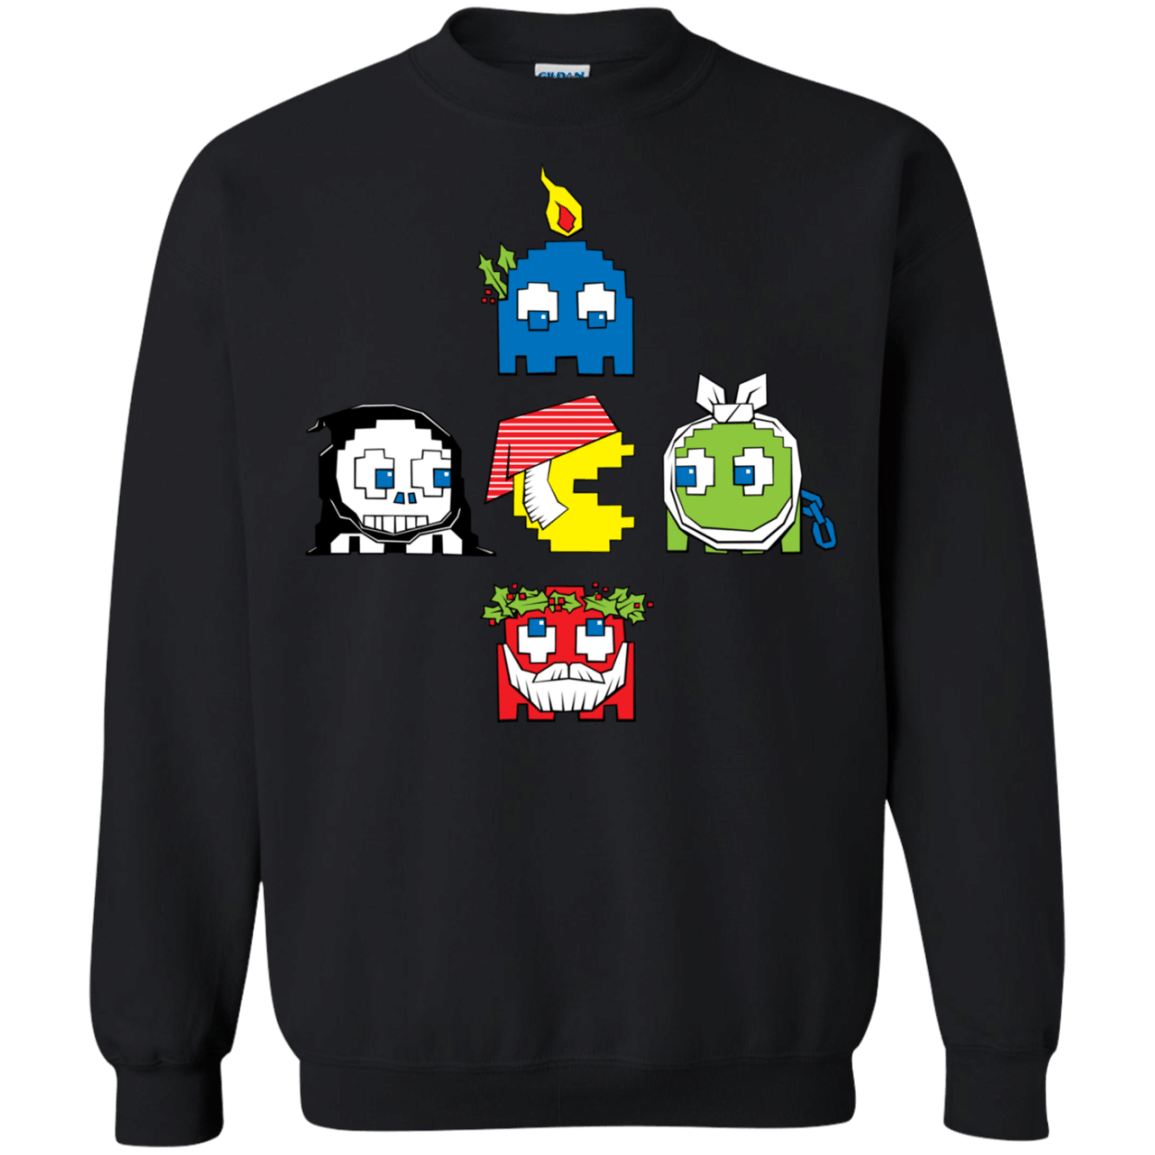 The Christmas Ghosts Uniex Sweatshirt